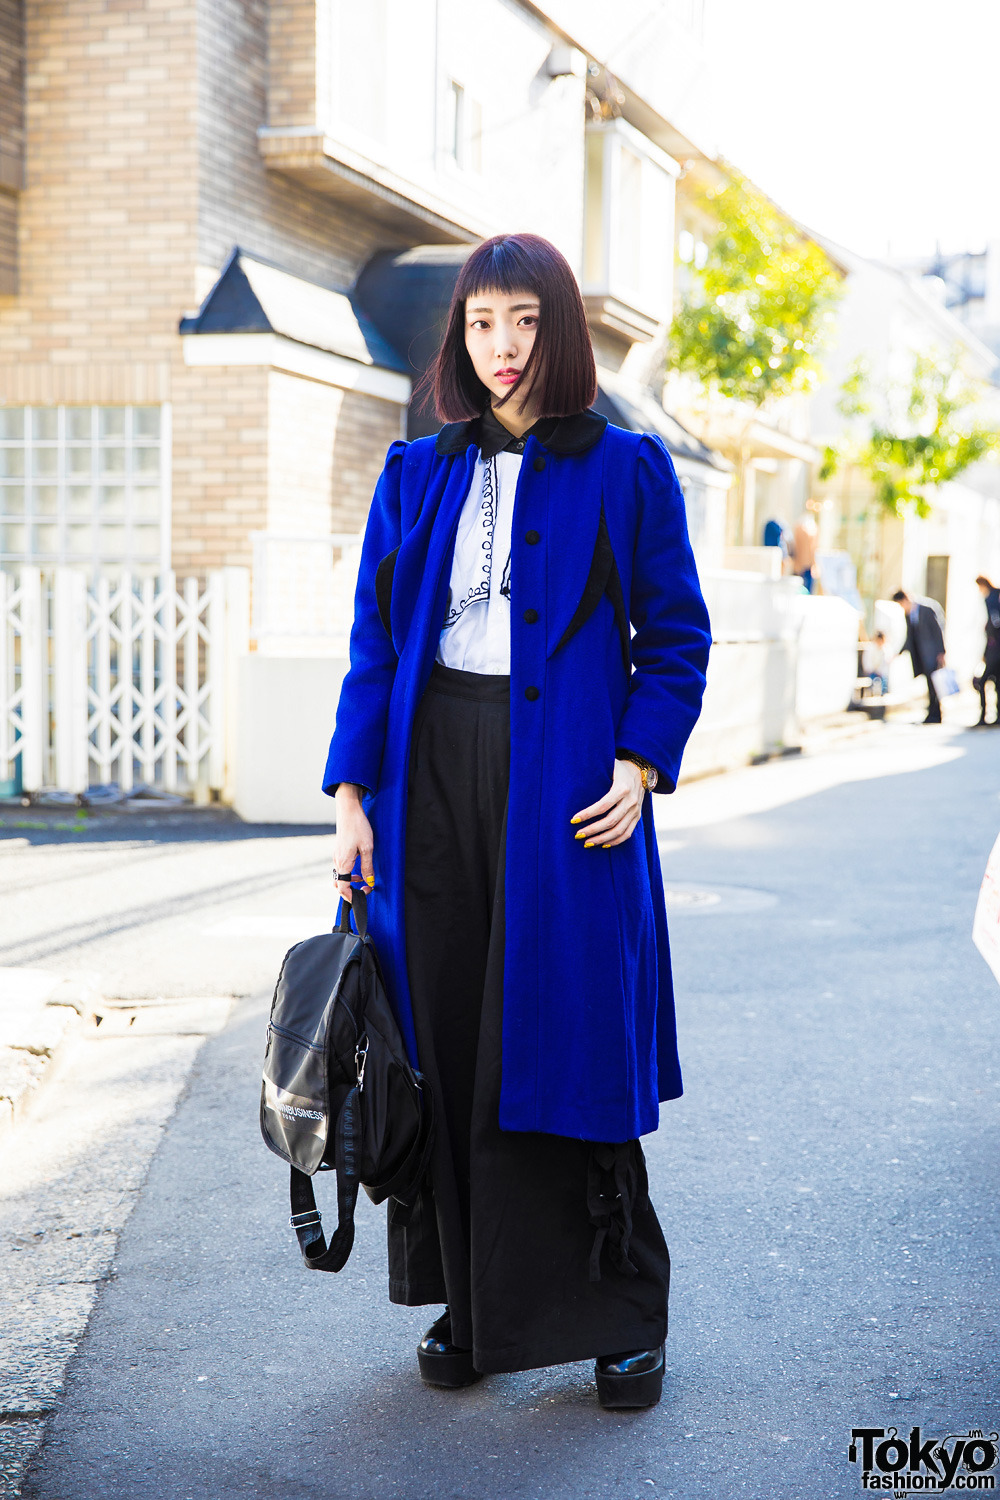 tokyo-fashion:  Japanese electrical engineer Lana on the street in Harajuku wearing